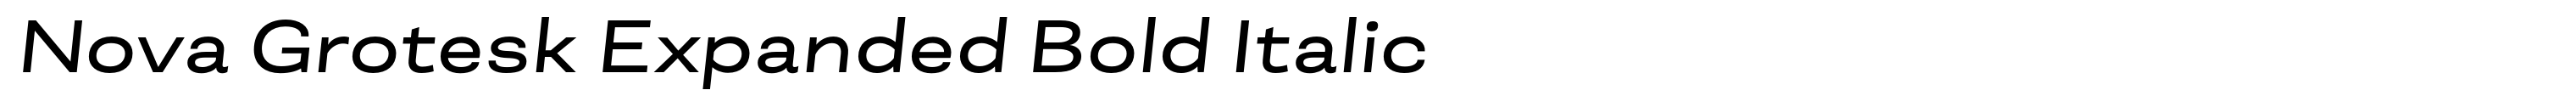 Nova Grotesk Expanded Bold Italic